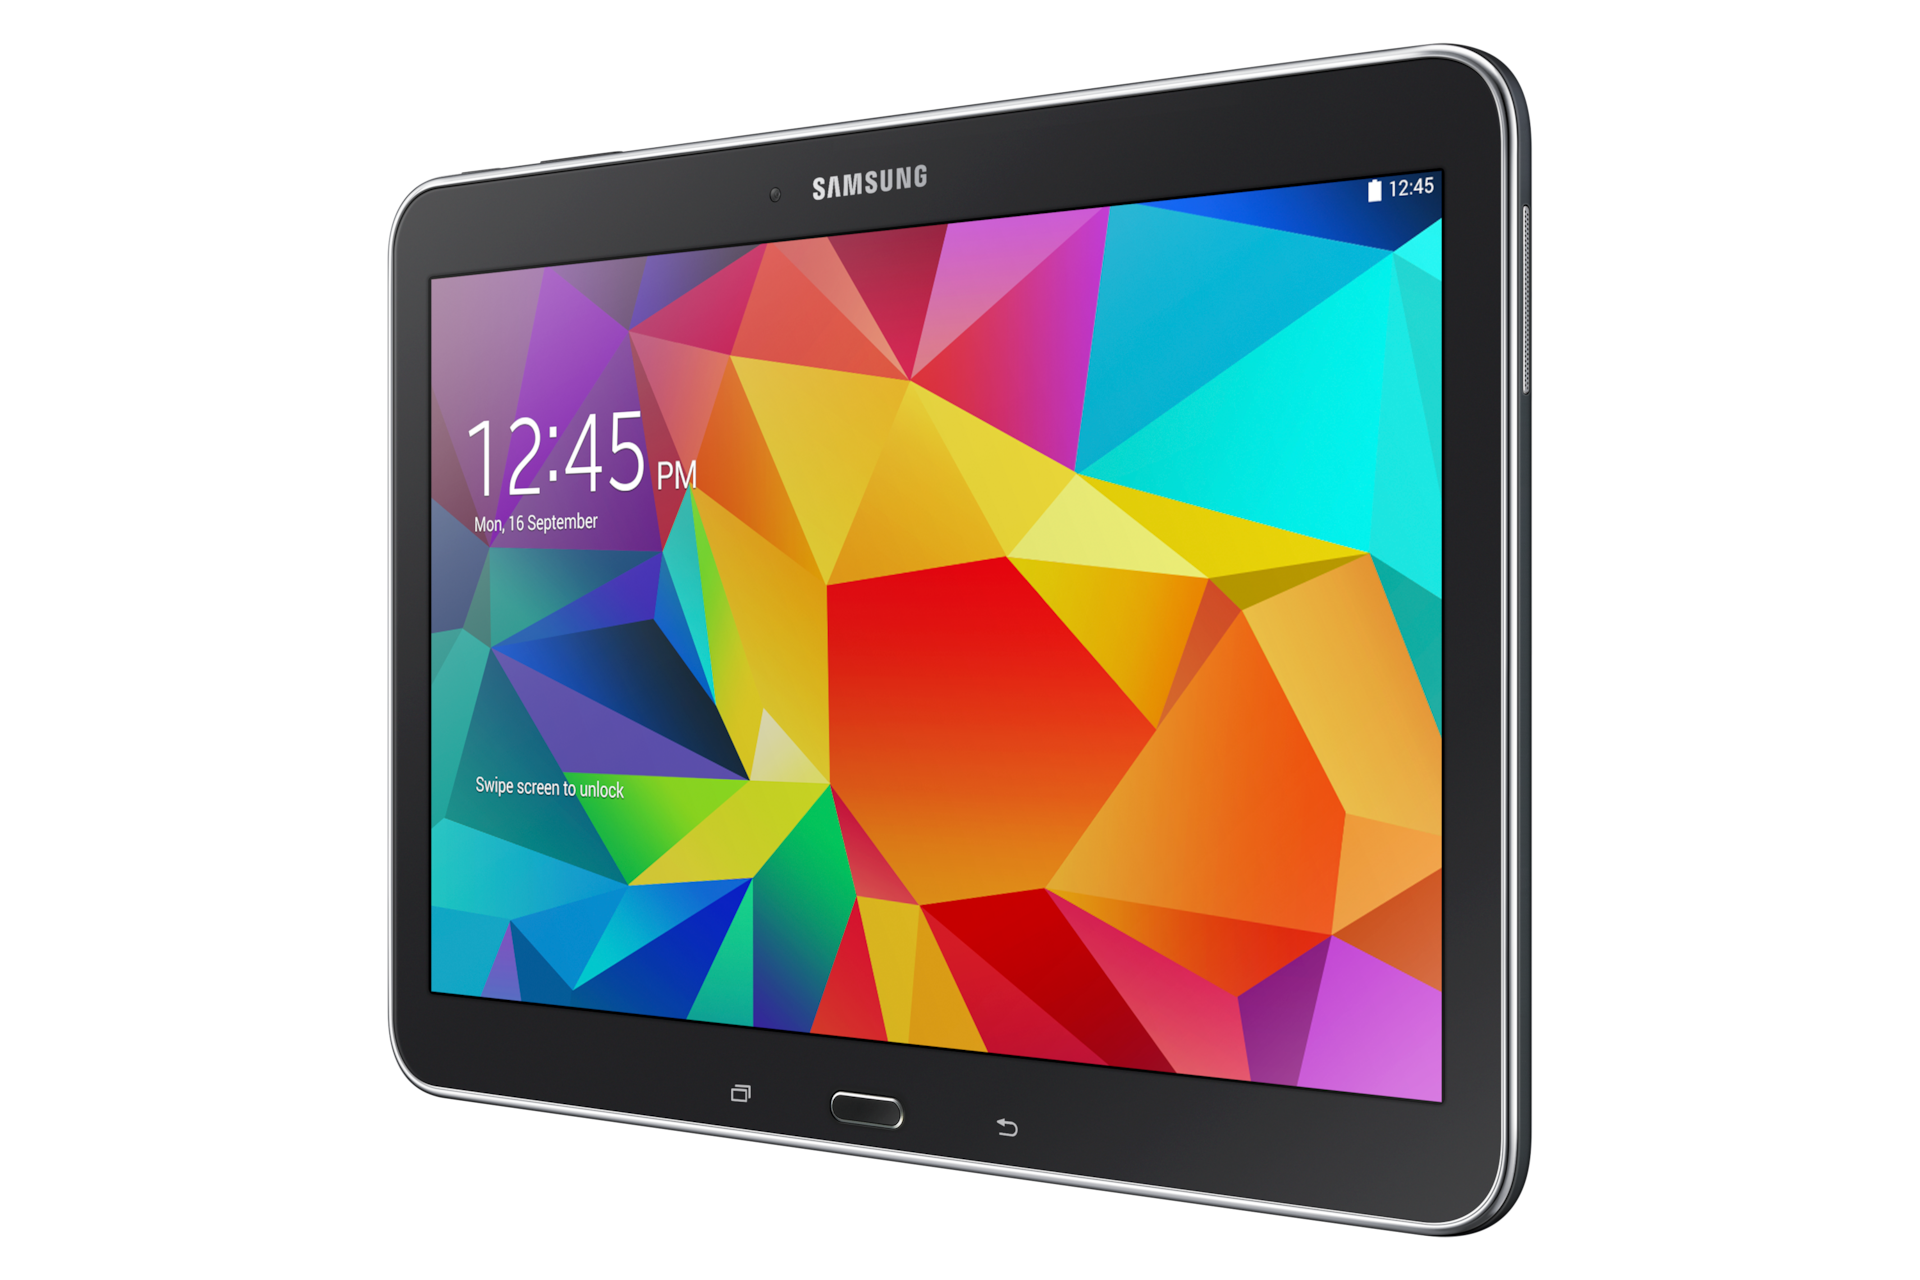 Samsung Galaxy Tab 4 7 0 Specifications